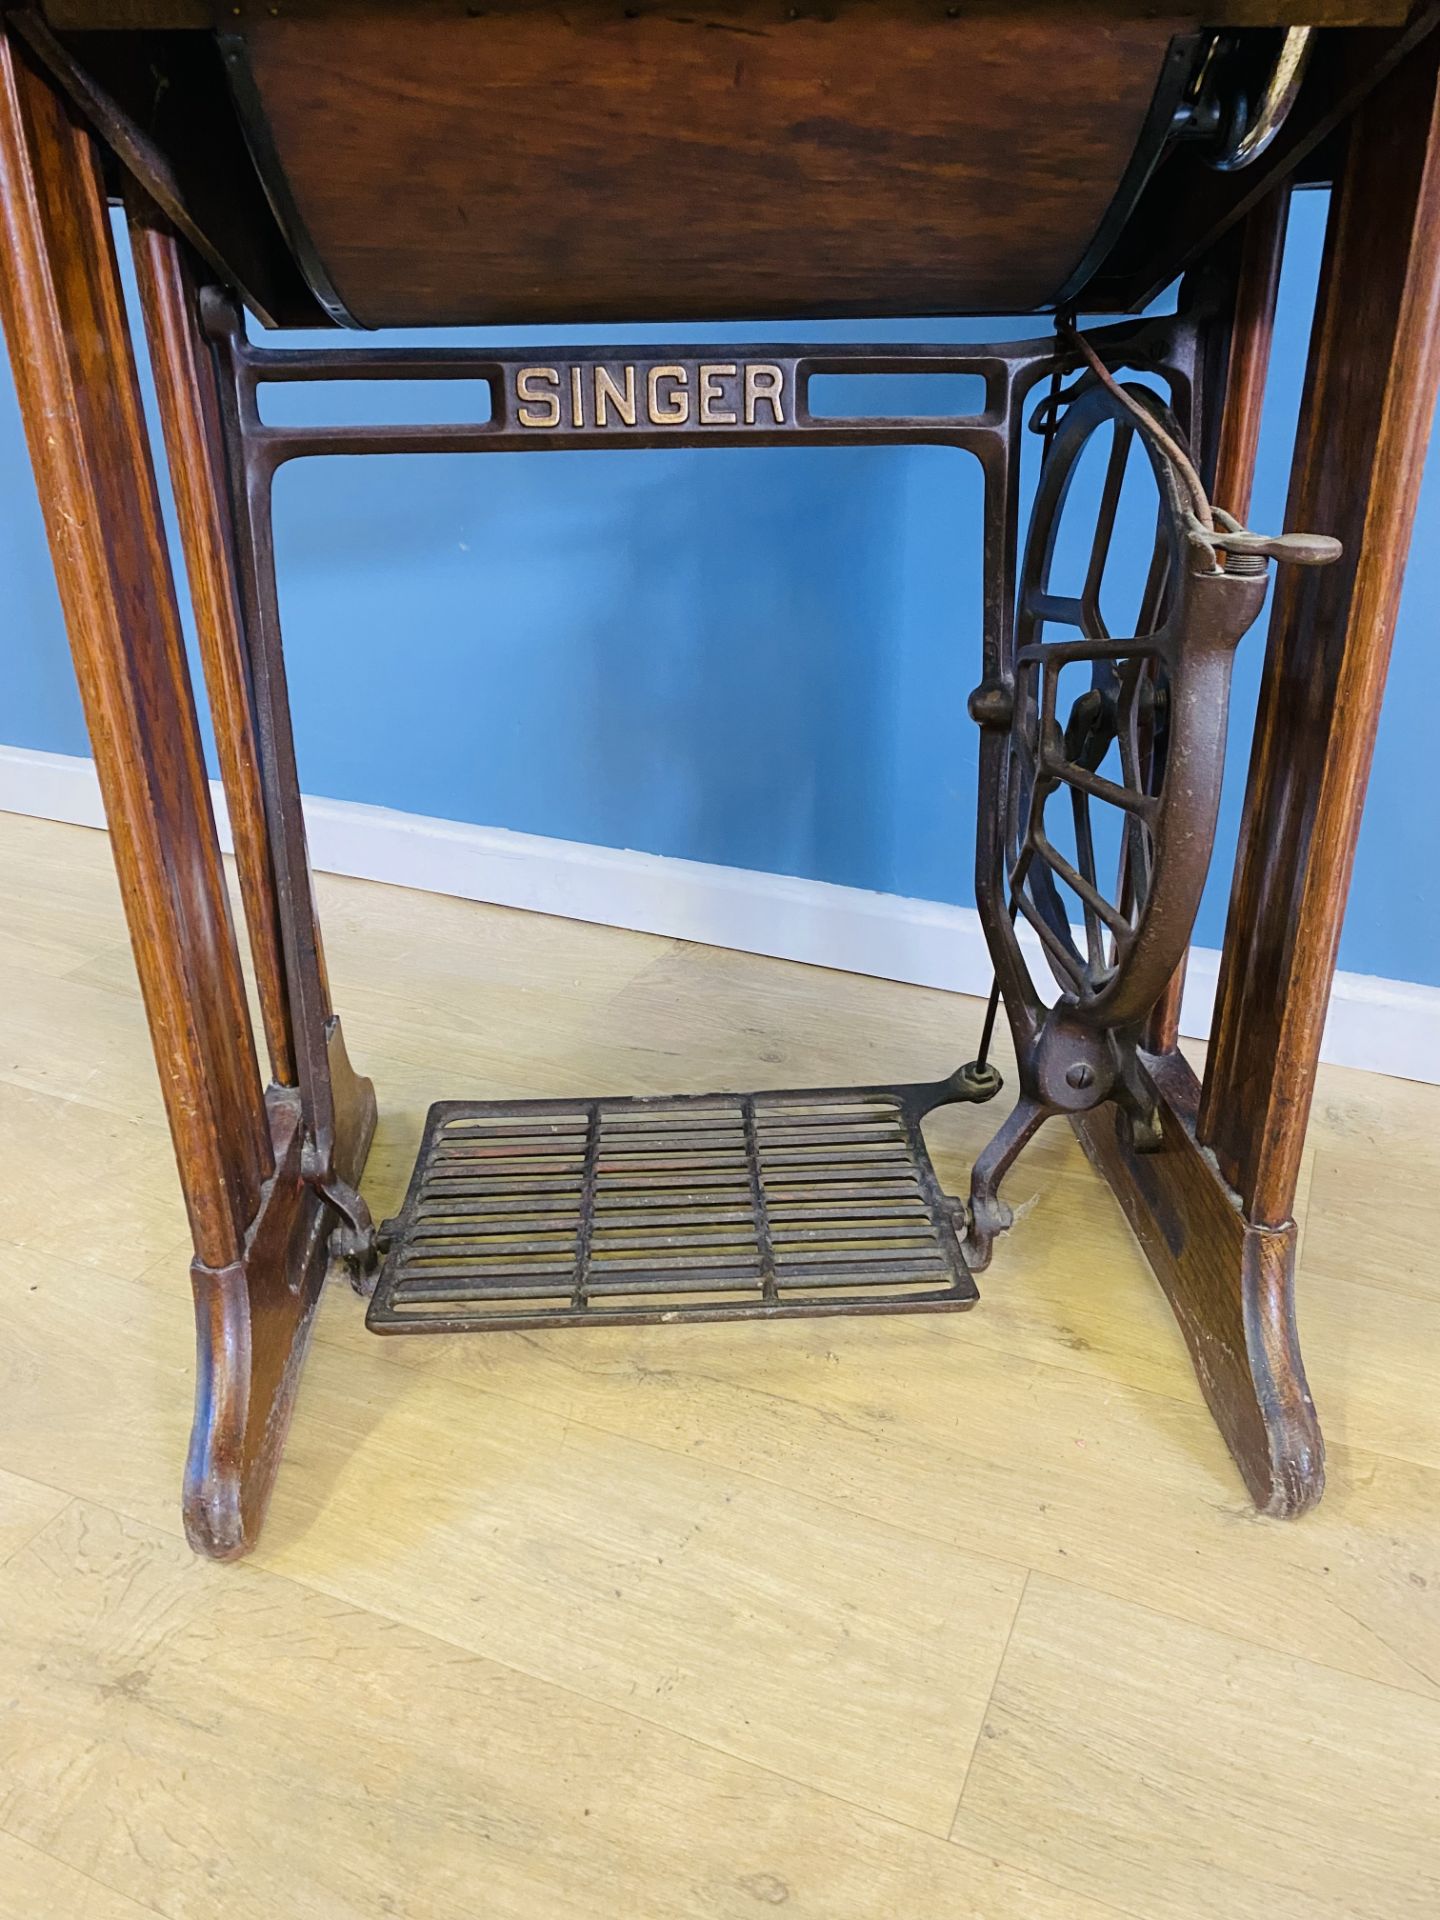 Singer treadle sewing machine - Image 2 of 5